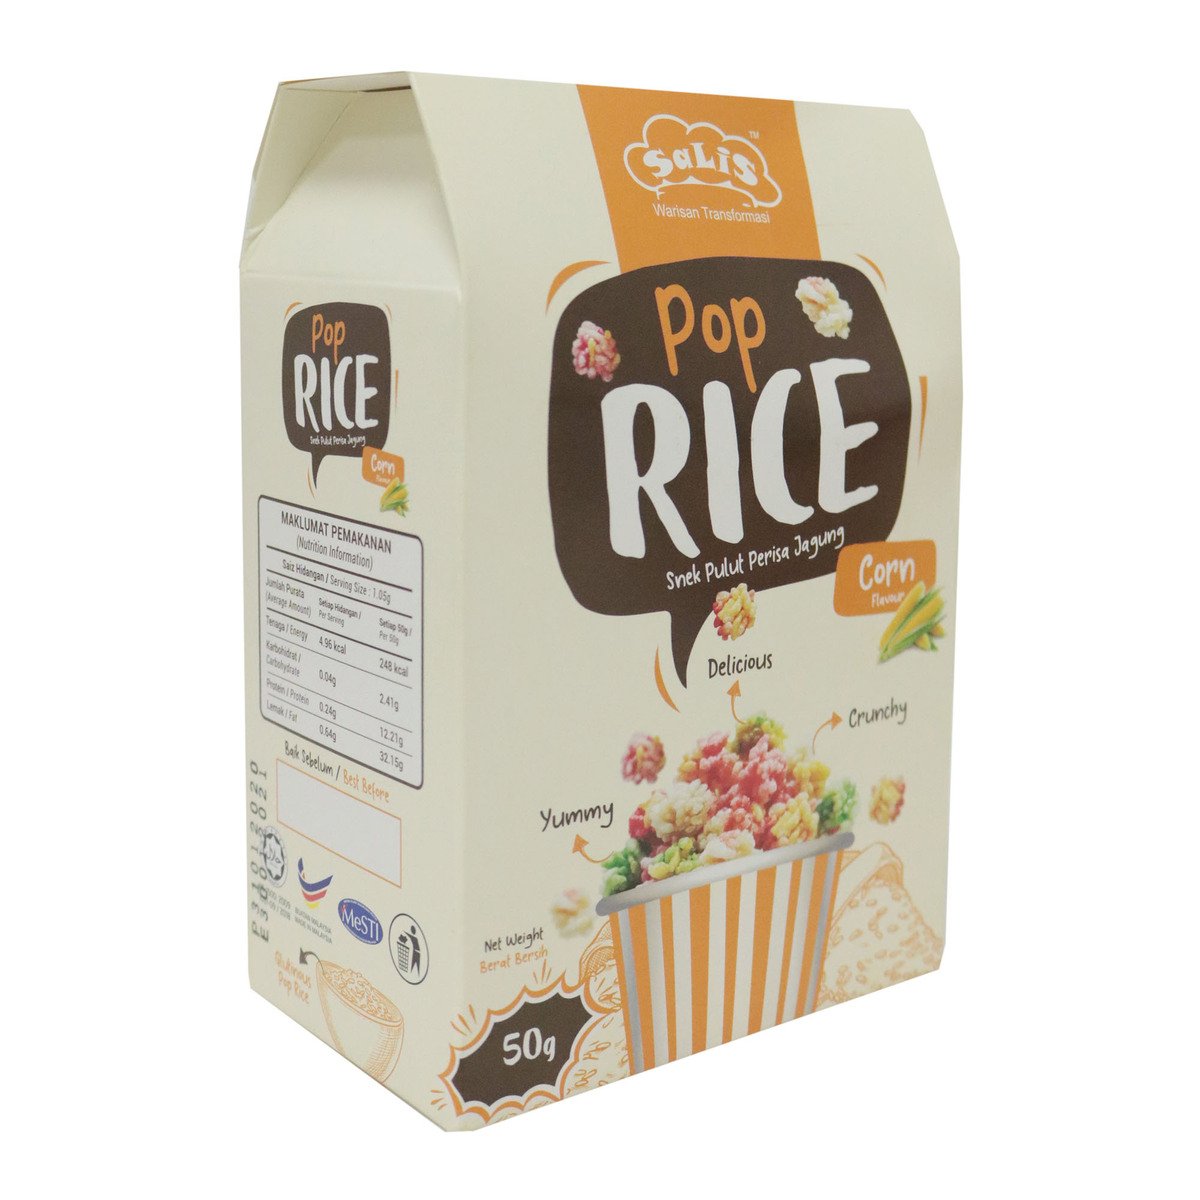 Salis Pop Rice Corn 50g